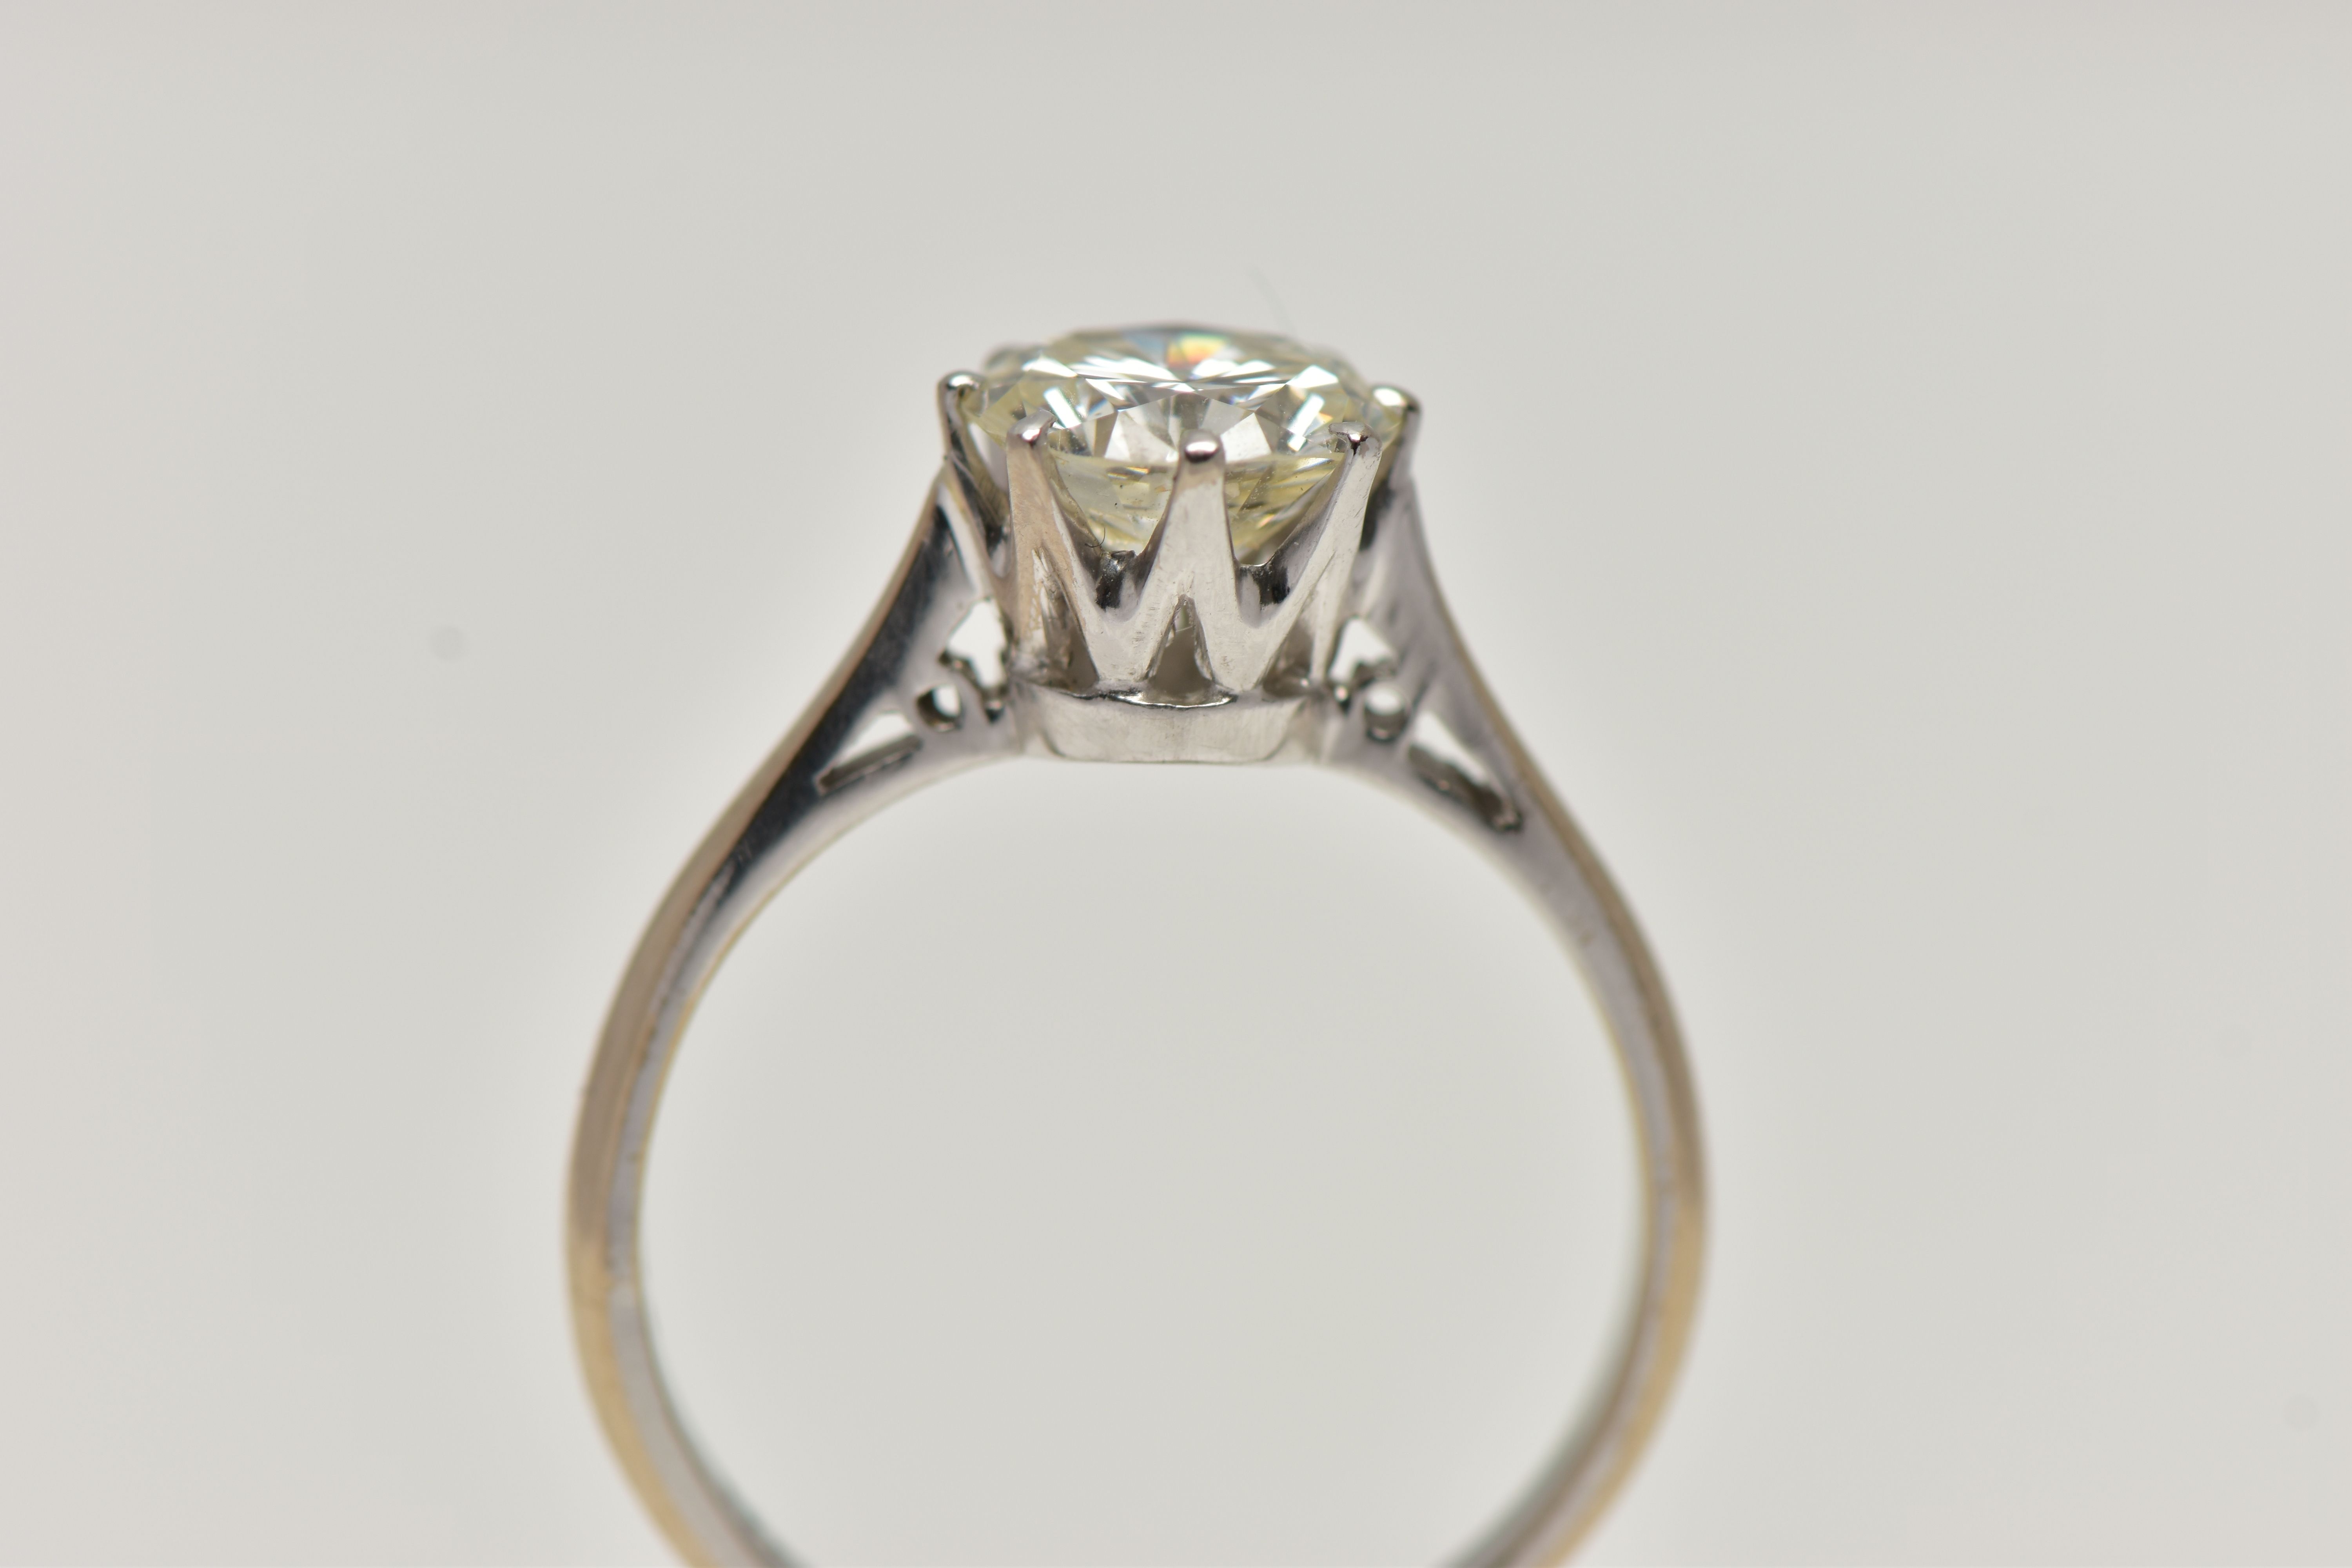 A MODERN SINGLE STONE DIAMOND RING, round brilliant cut diamond, estimated carat weight 1.50ct, - Image 6 of 12